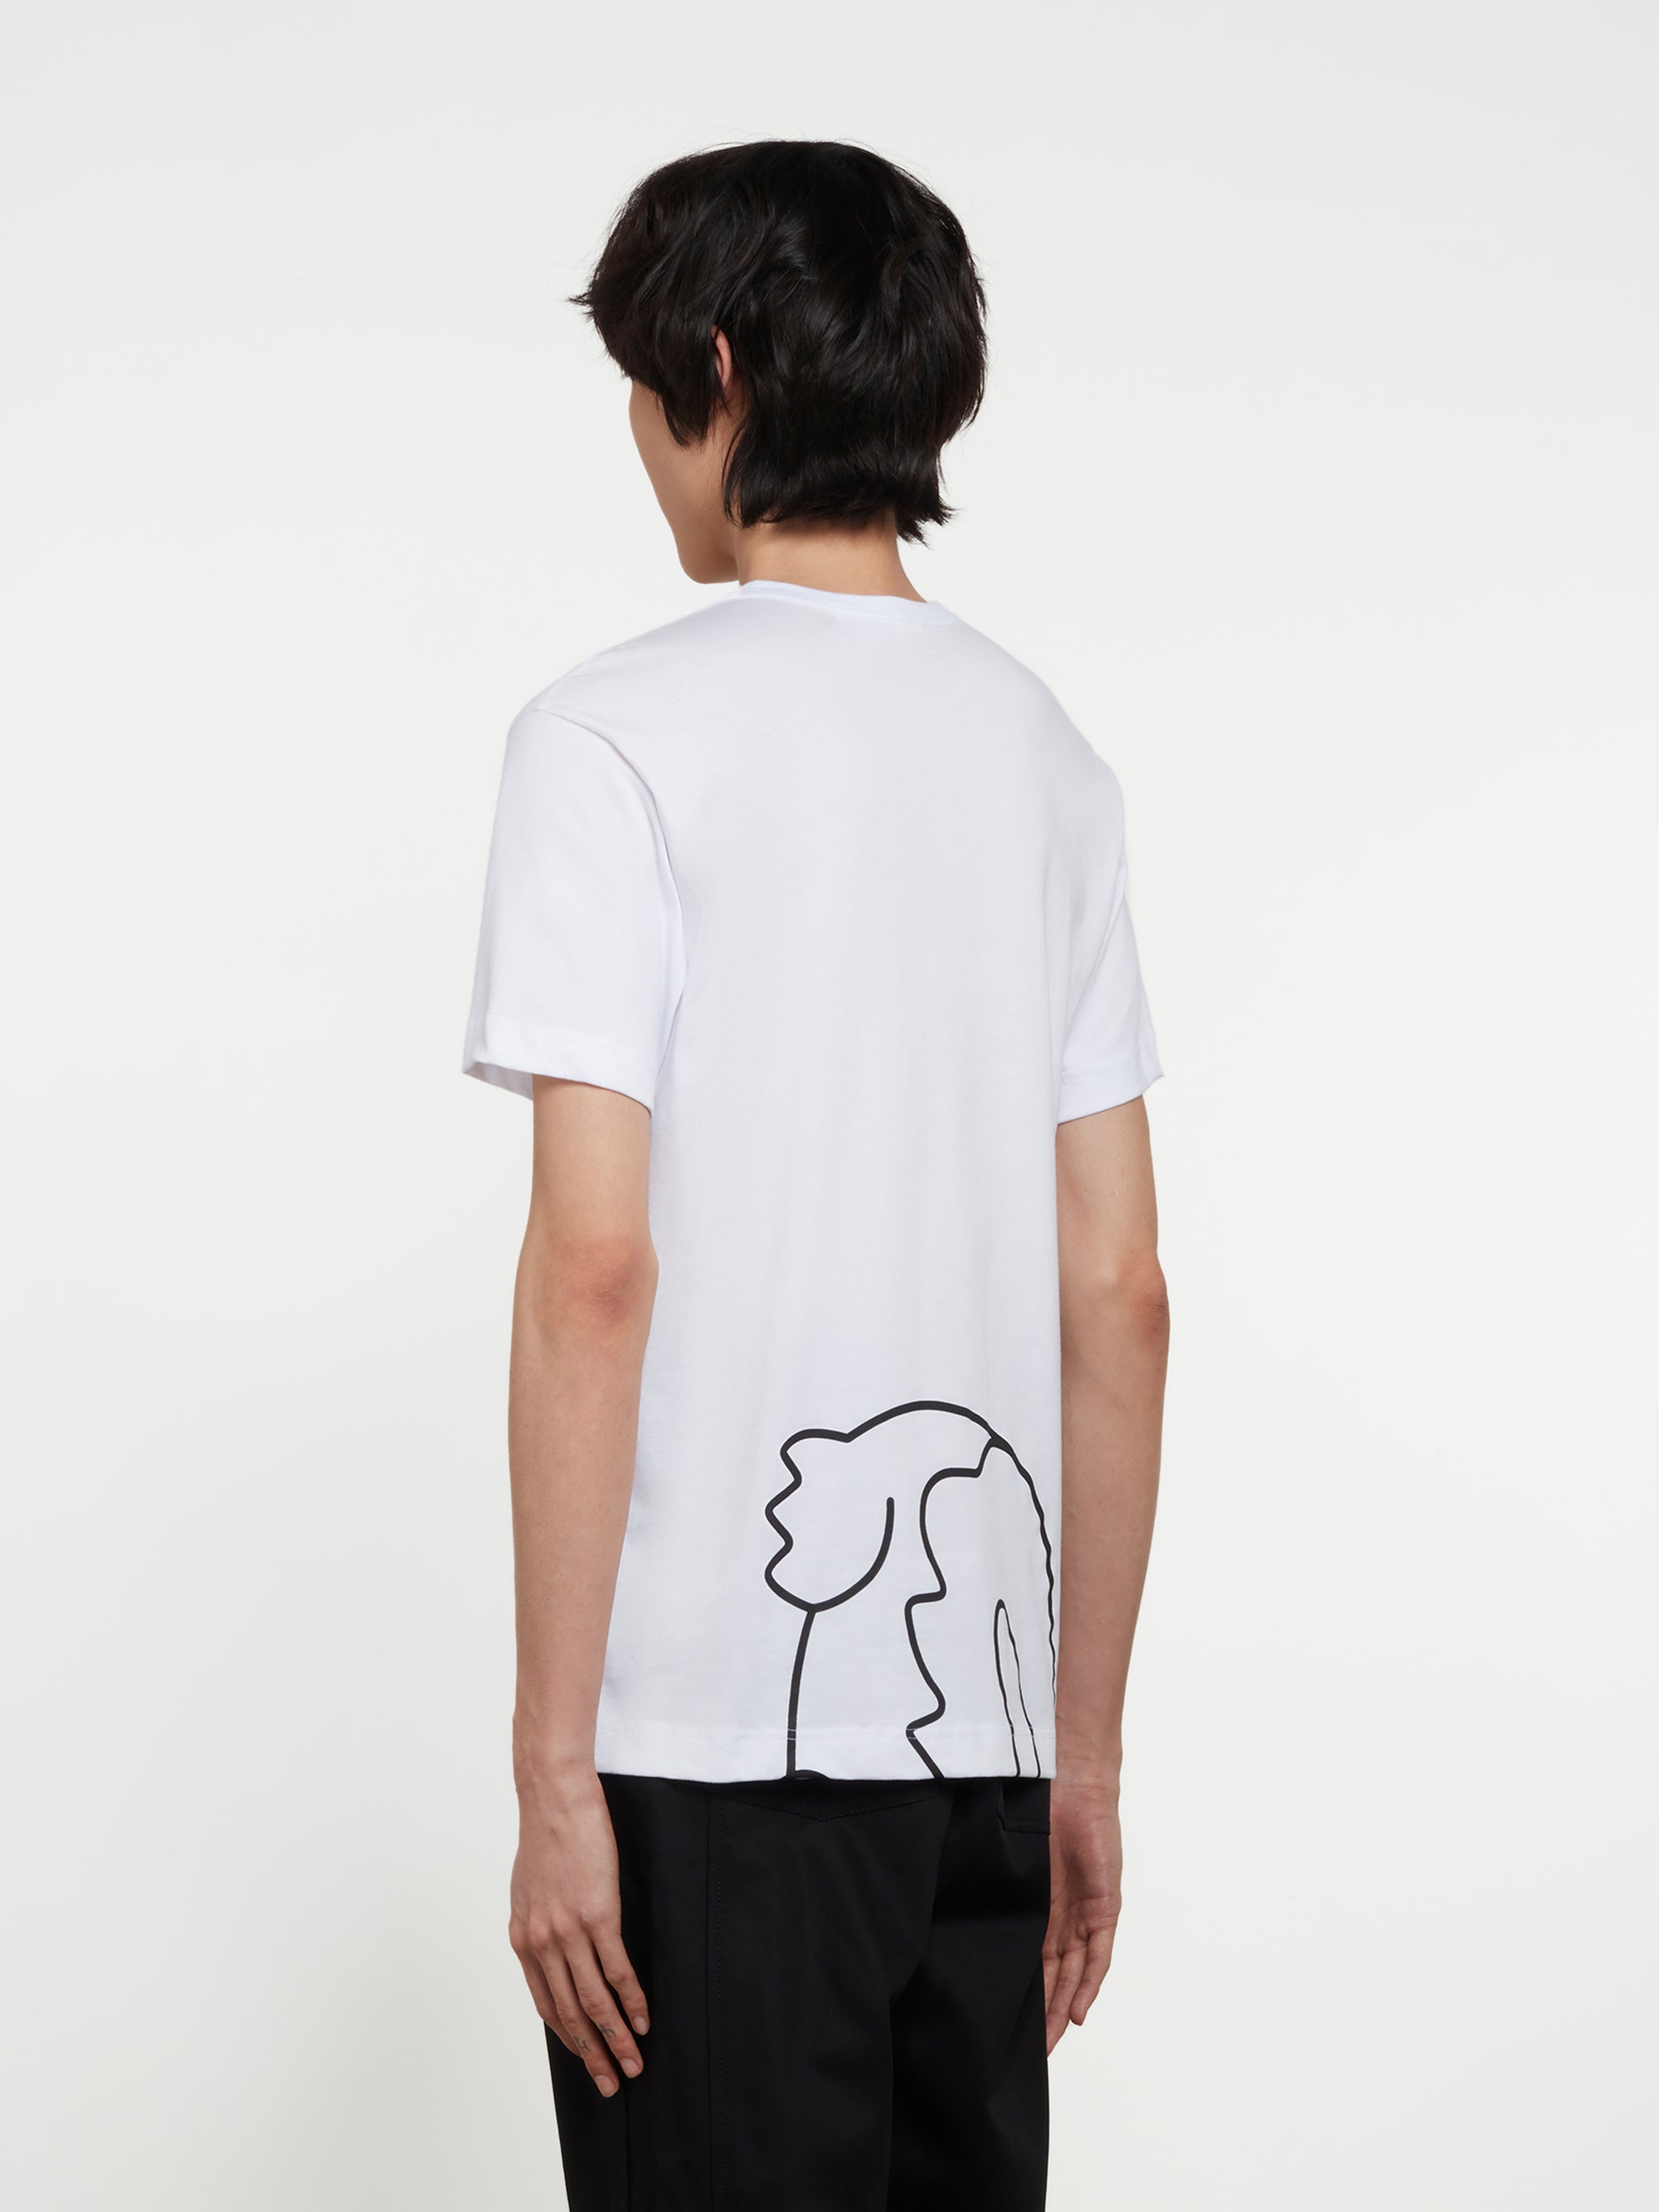 CDG Shirt - Lacoste Men’s Printed T-Shirt - (White) view 3